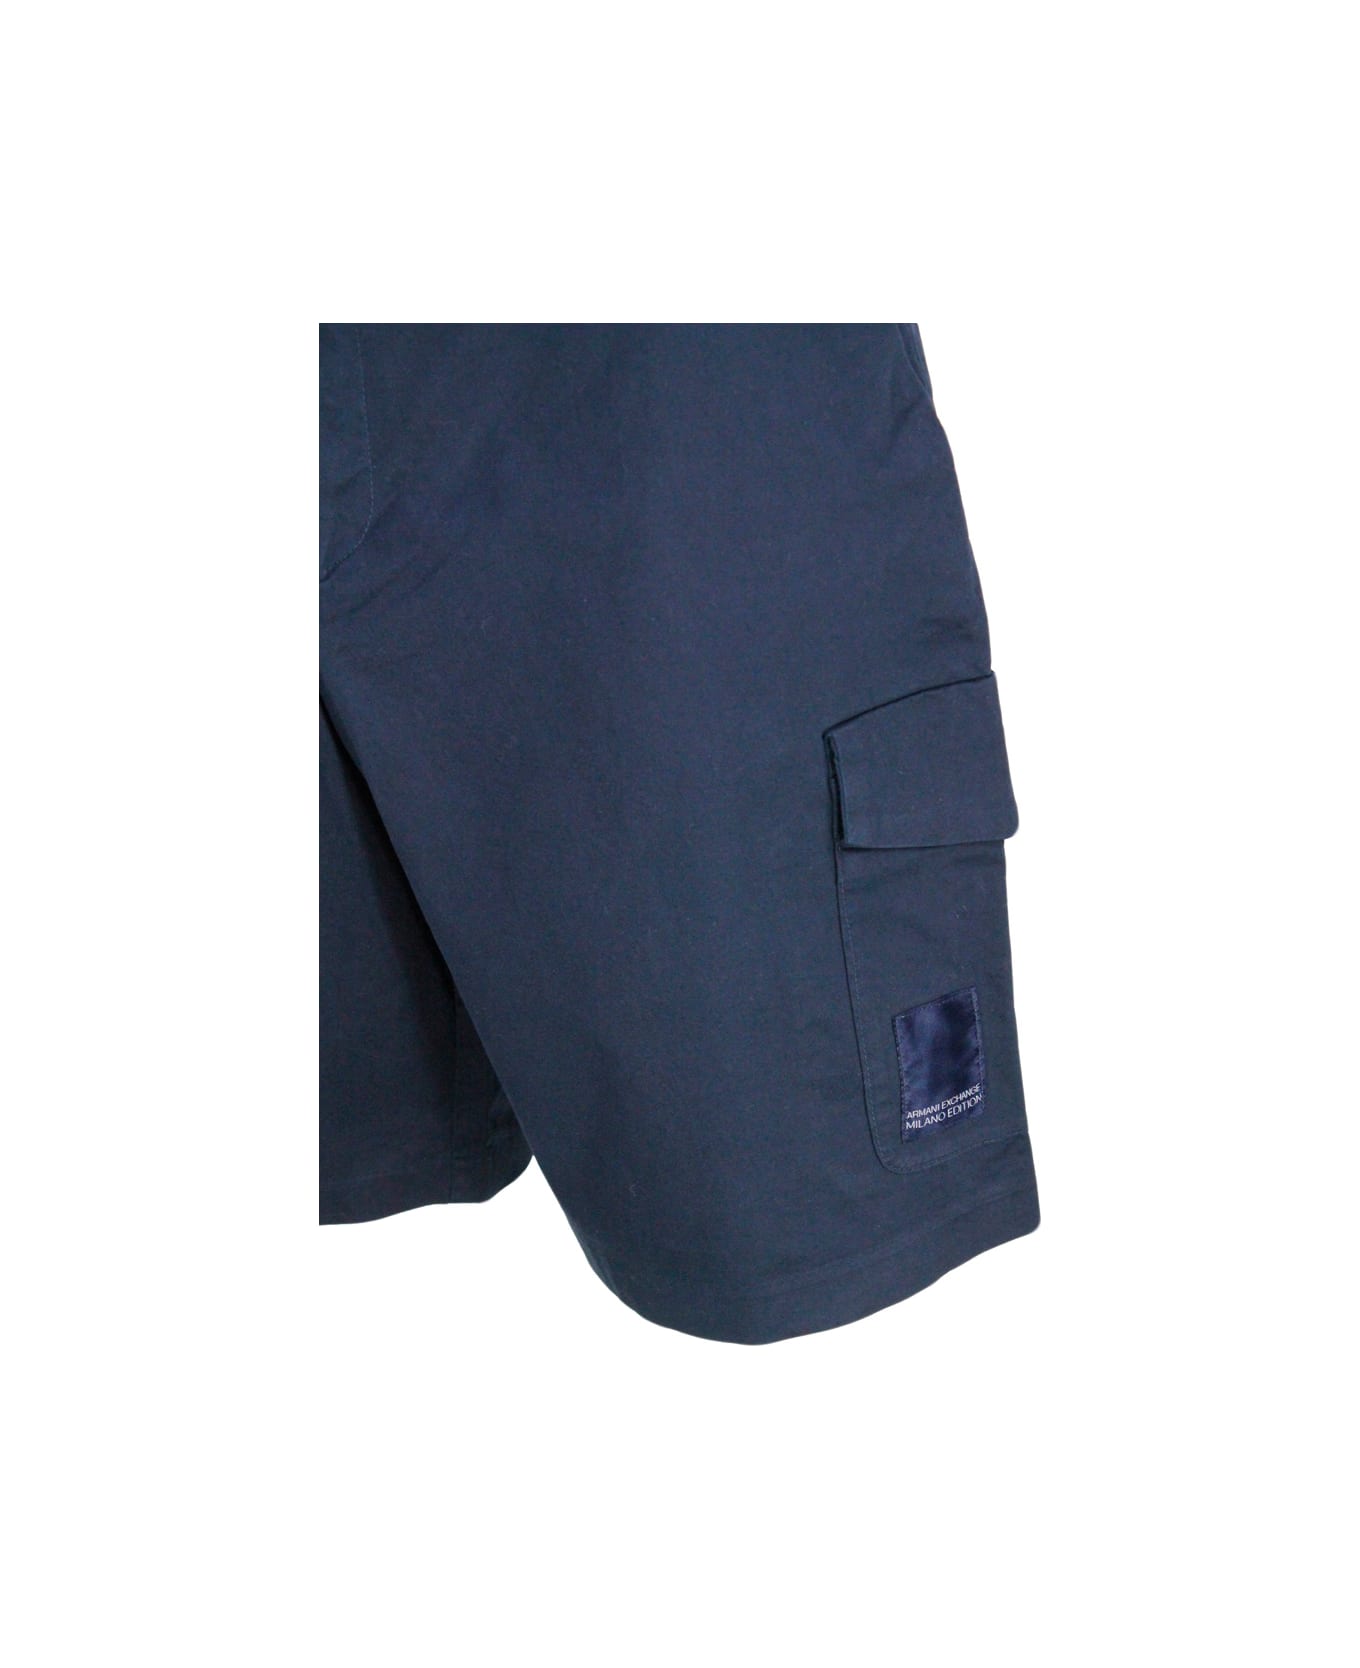 Armani Collezioni Stretch Cotton Bermuda Shorts, Cargo Model With Large Pockets On The Leg And Zip And Button Closure - Blu ショートパンツ